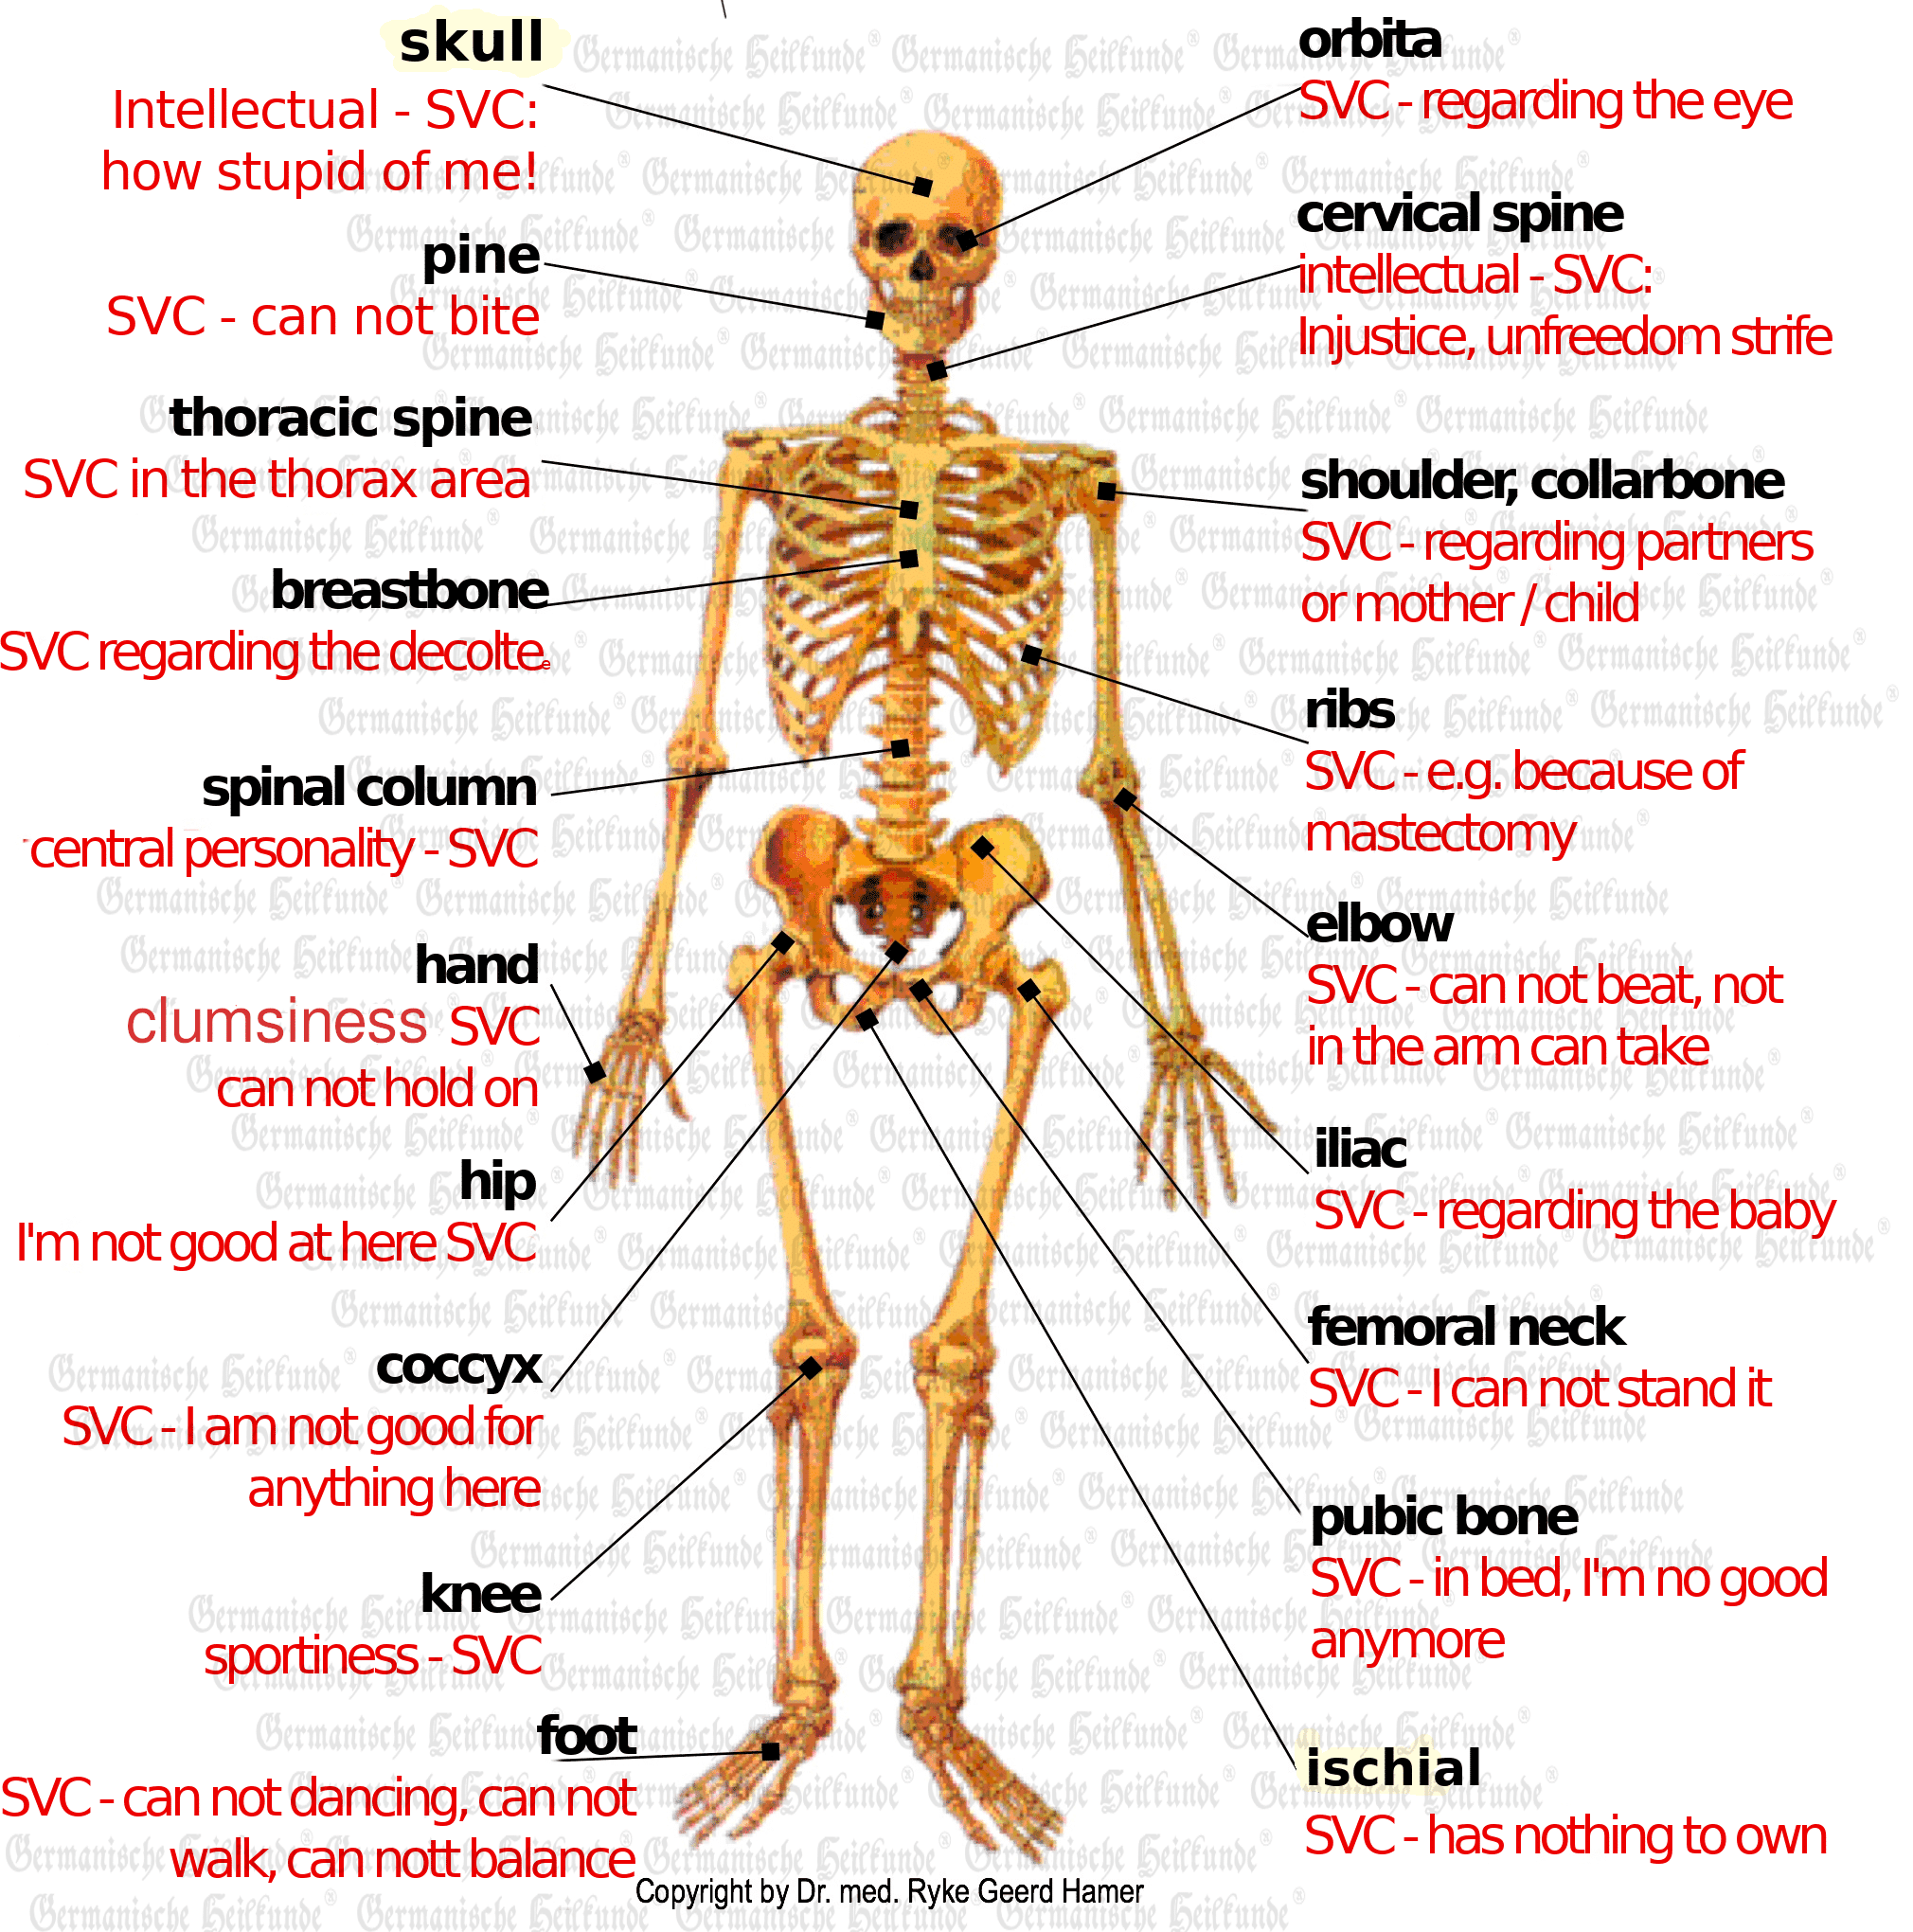 Organ Bones - Skeleton